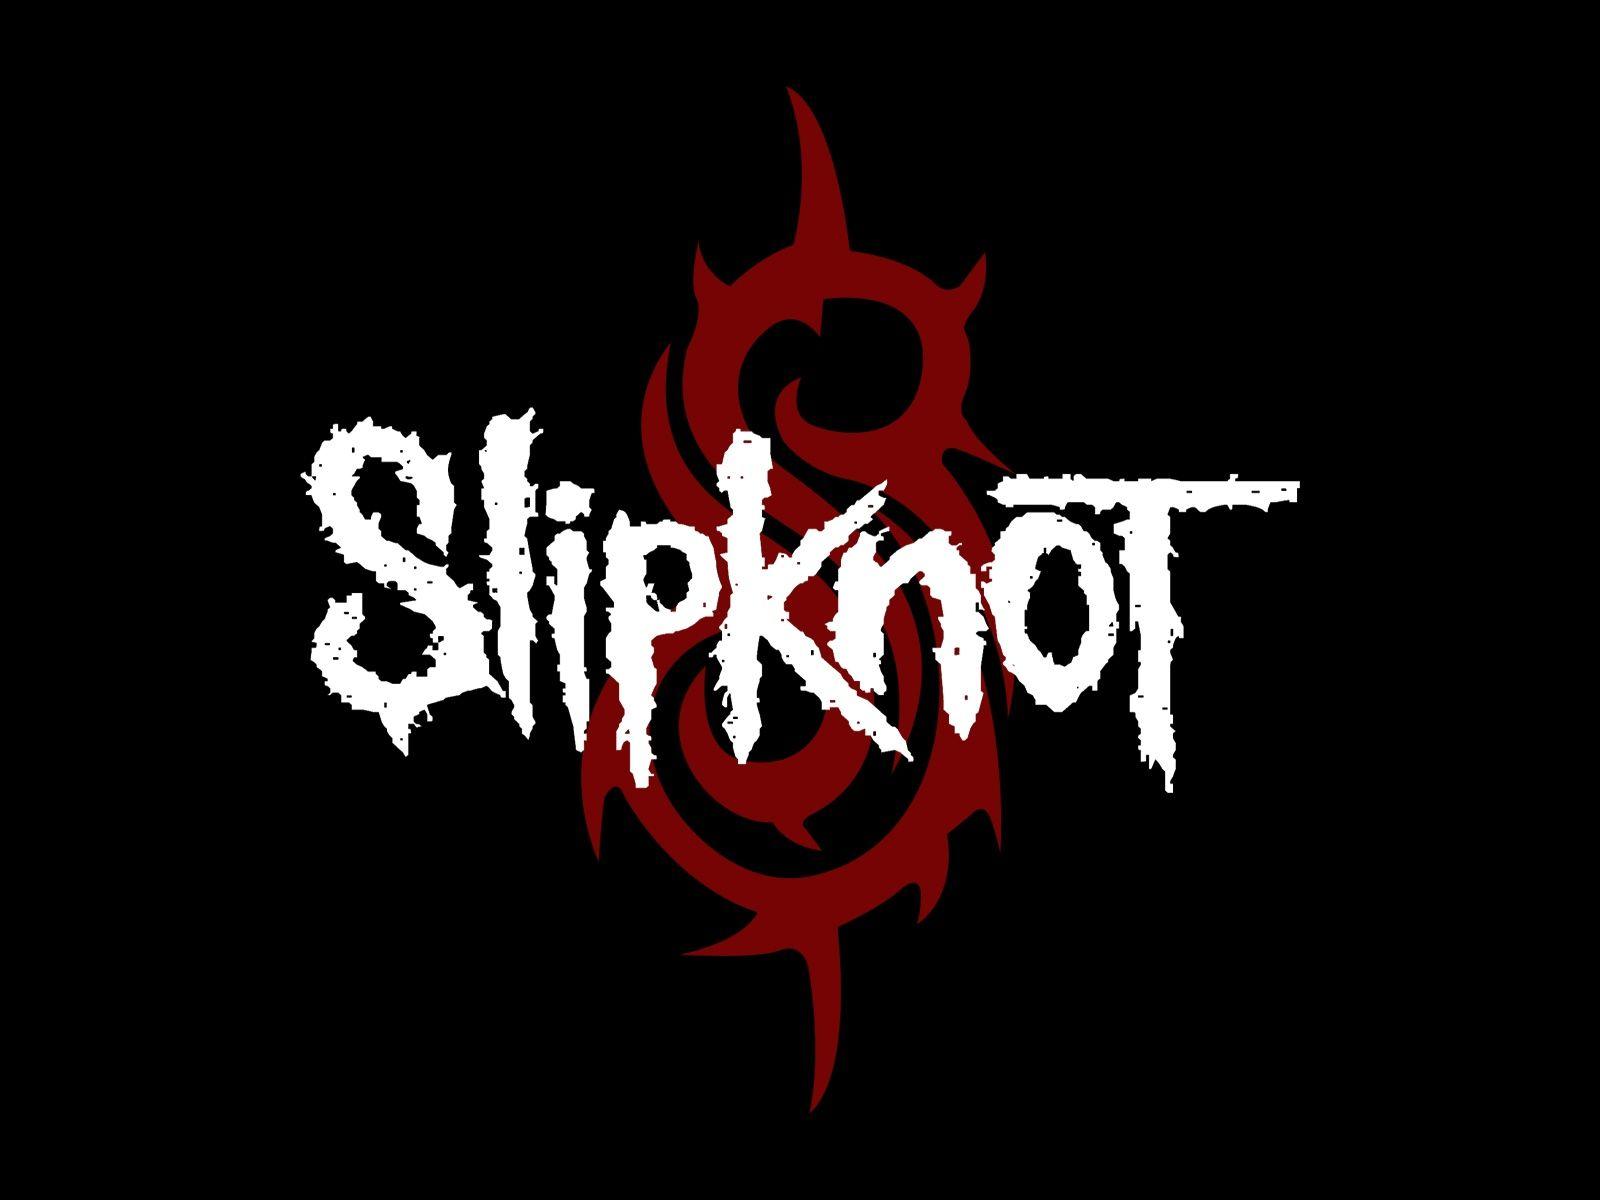 Slipknot Logo Wallpaper. Daily inspiration art photo, picture